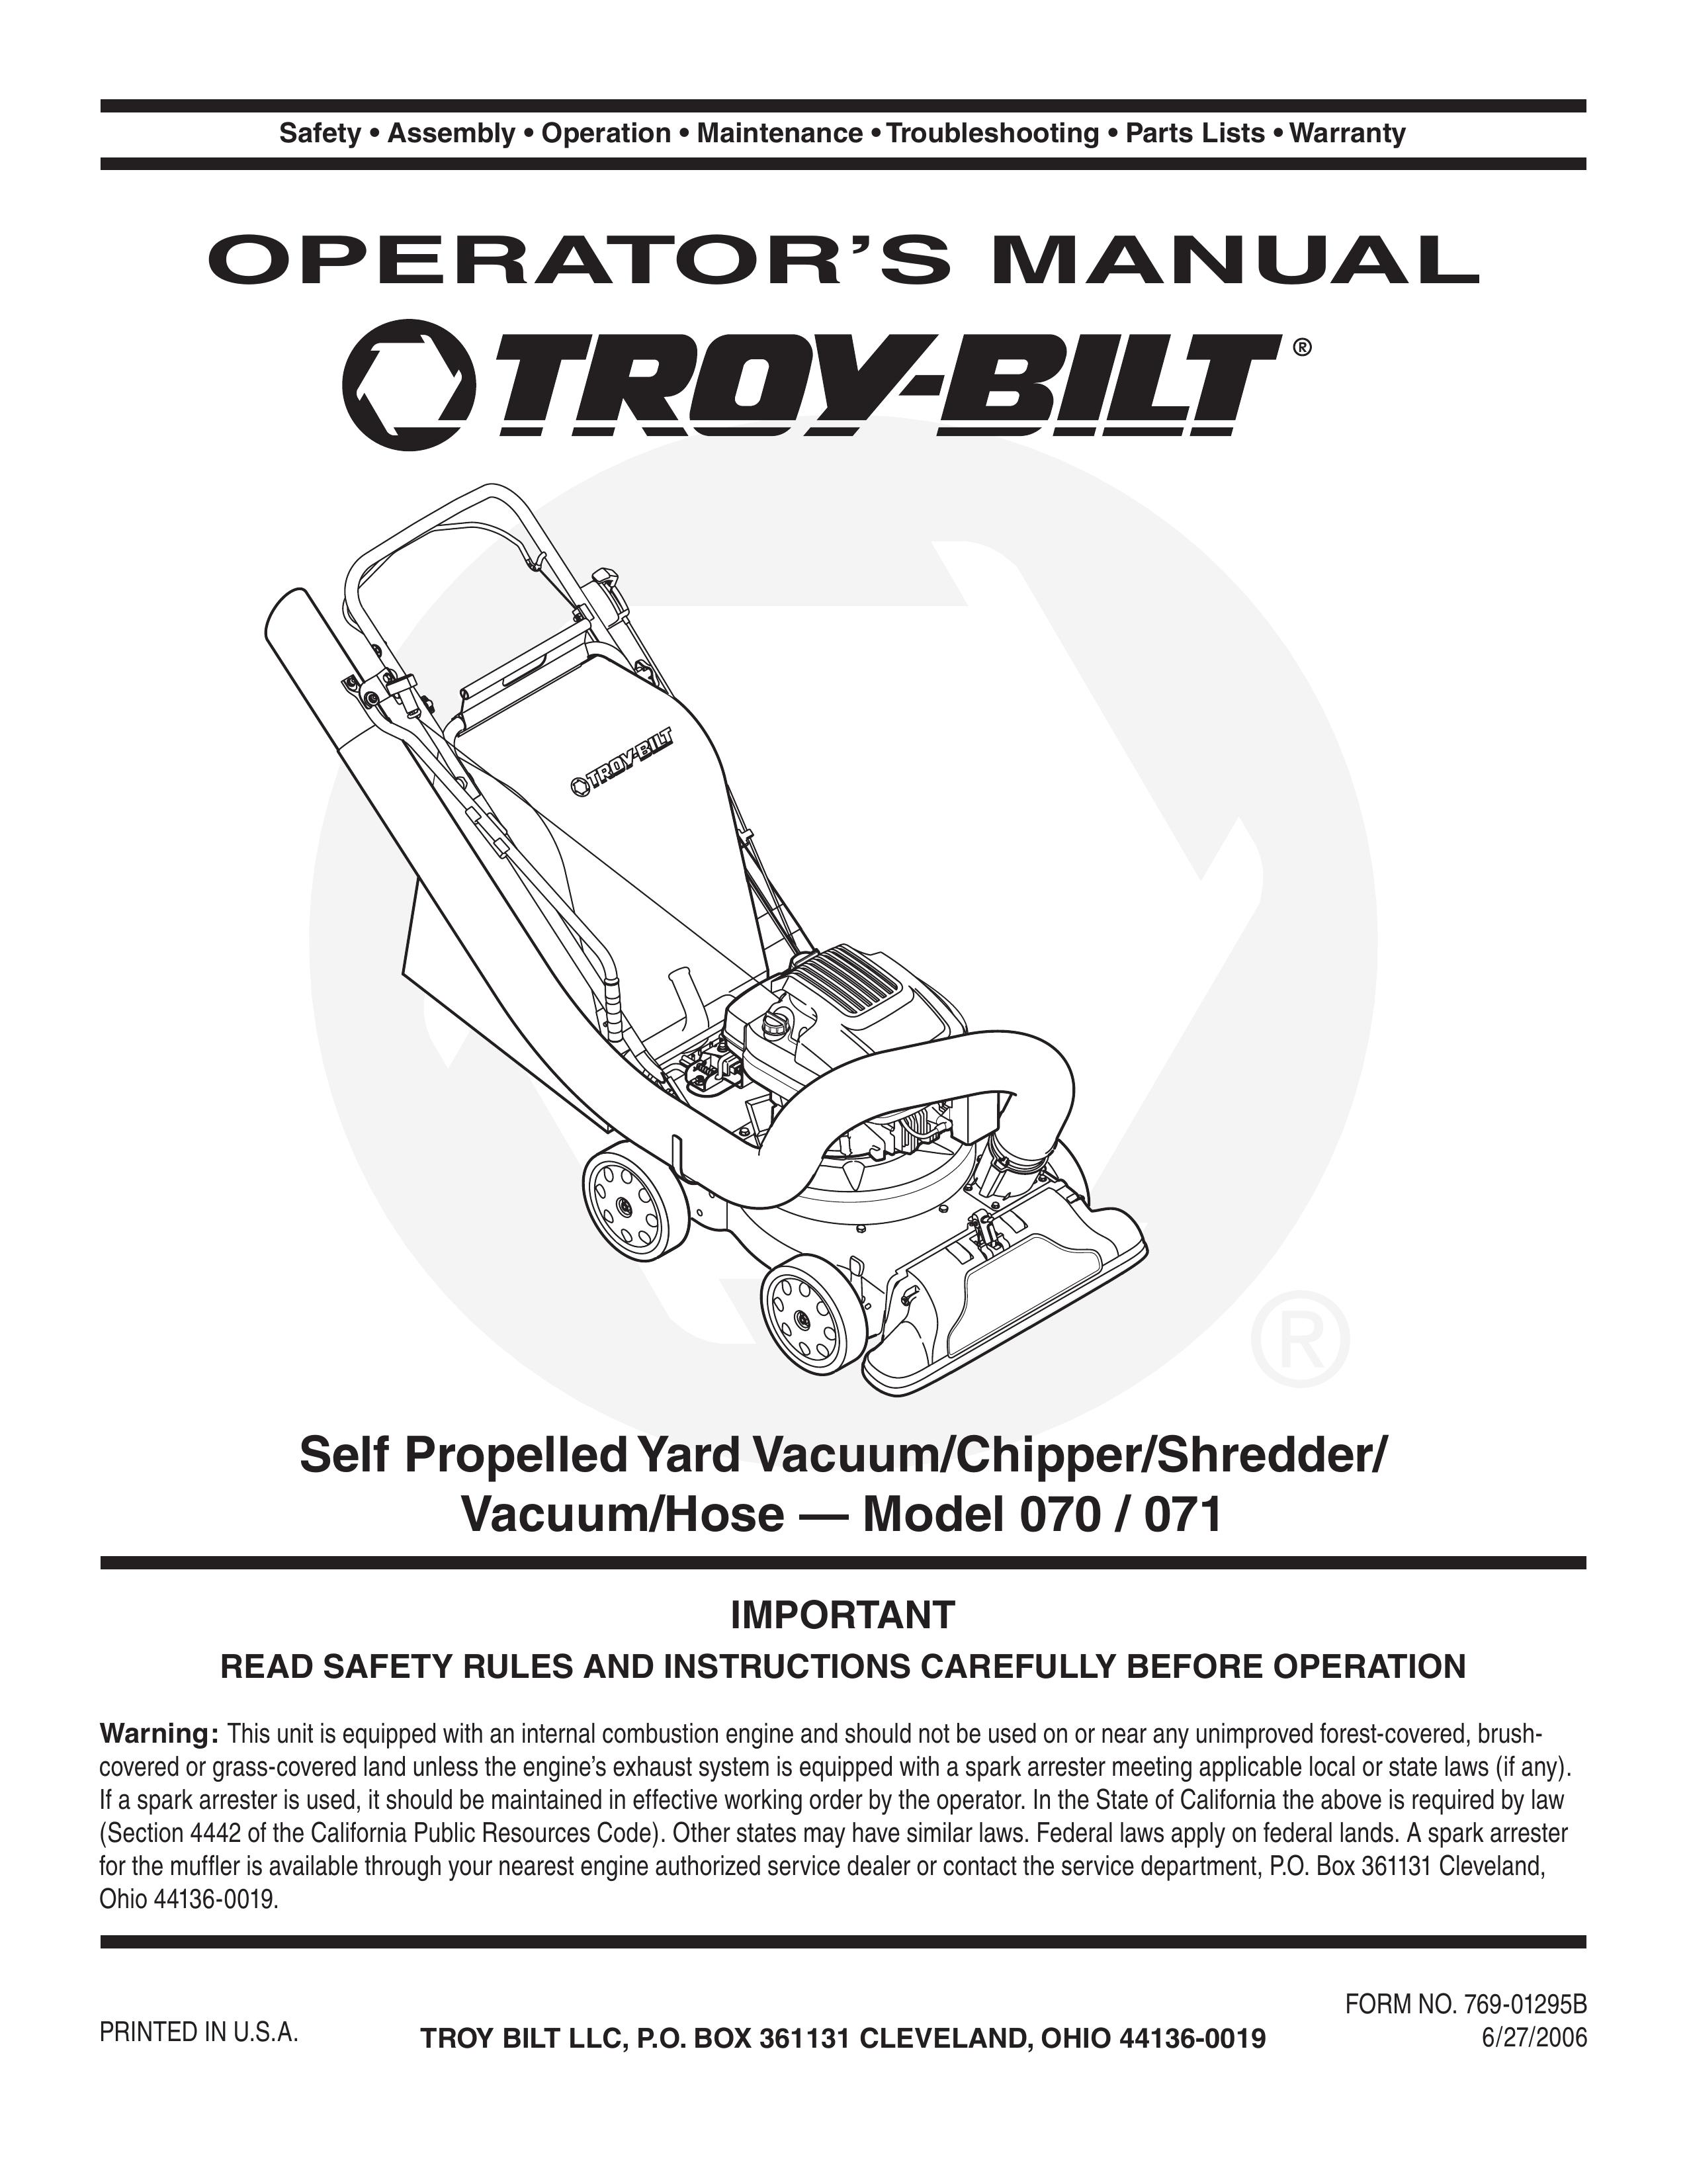 Troy-Bilt 070 Chipper User Manual